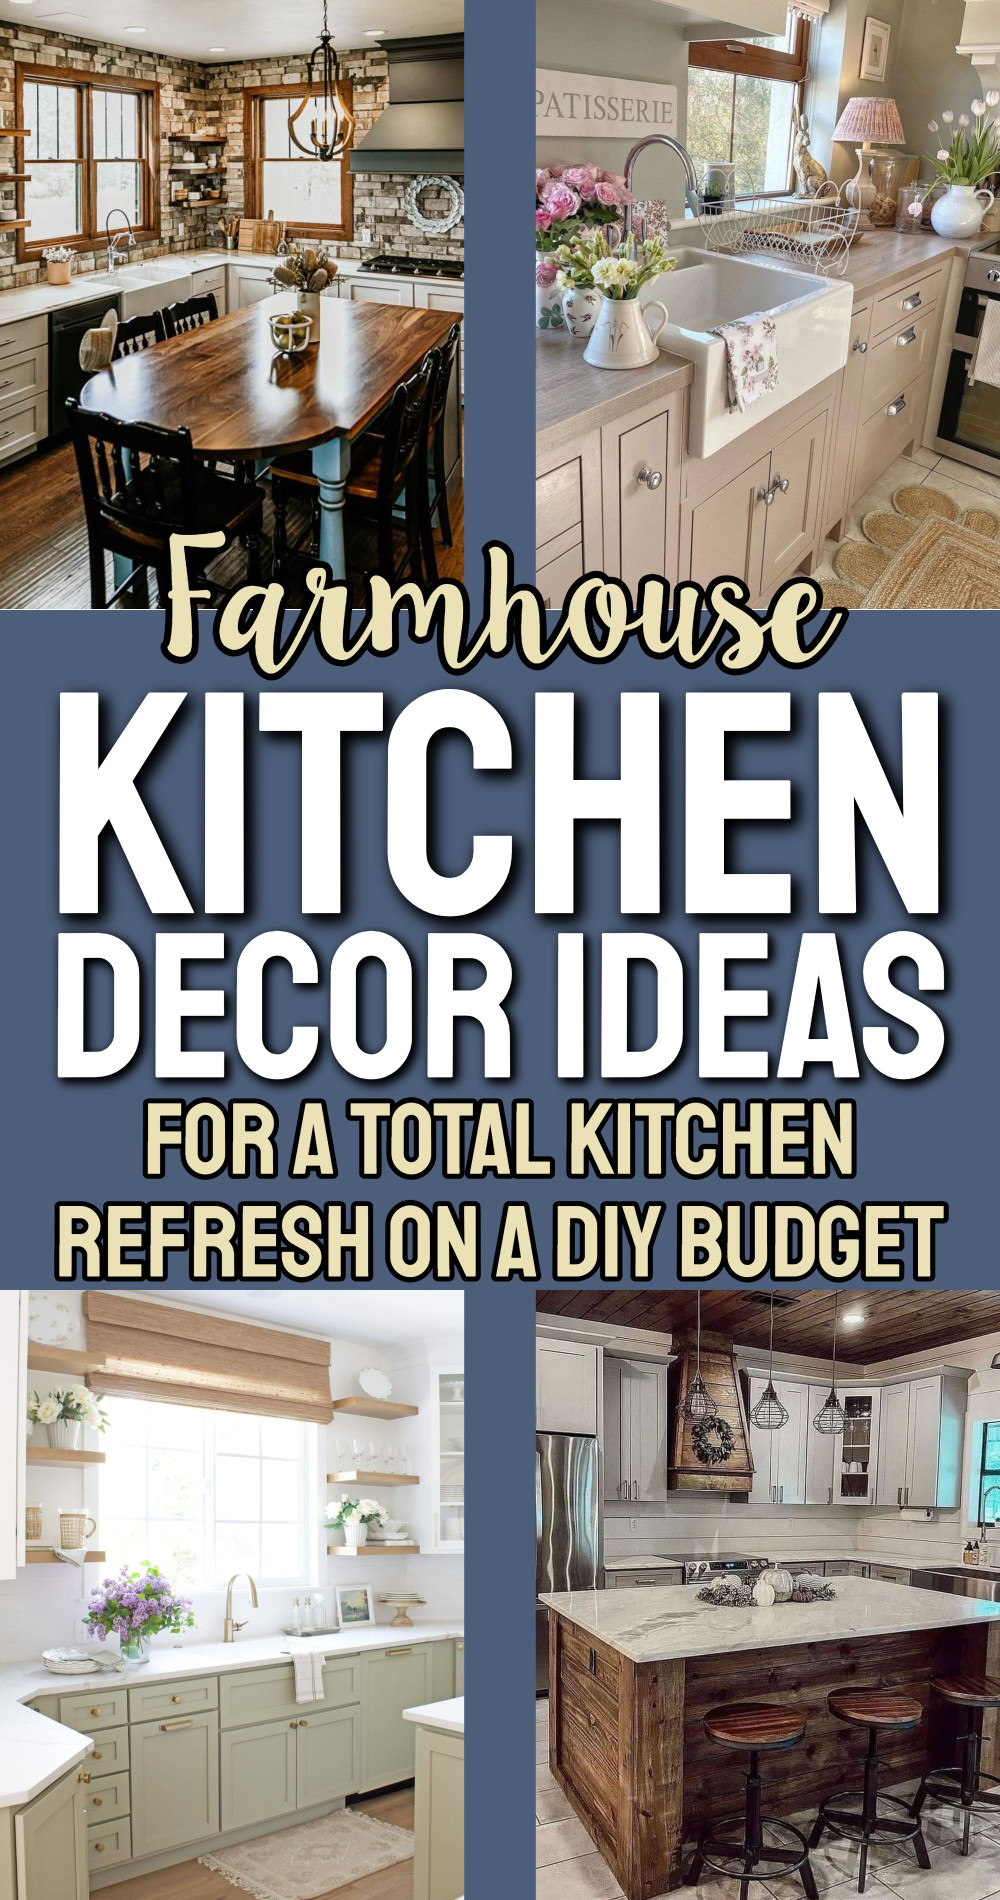 Farmhouse Kitchen Decor Ideas For a Total Kitchen Refresh On a DIY Budget